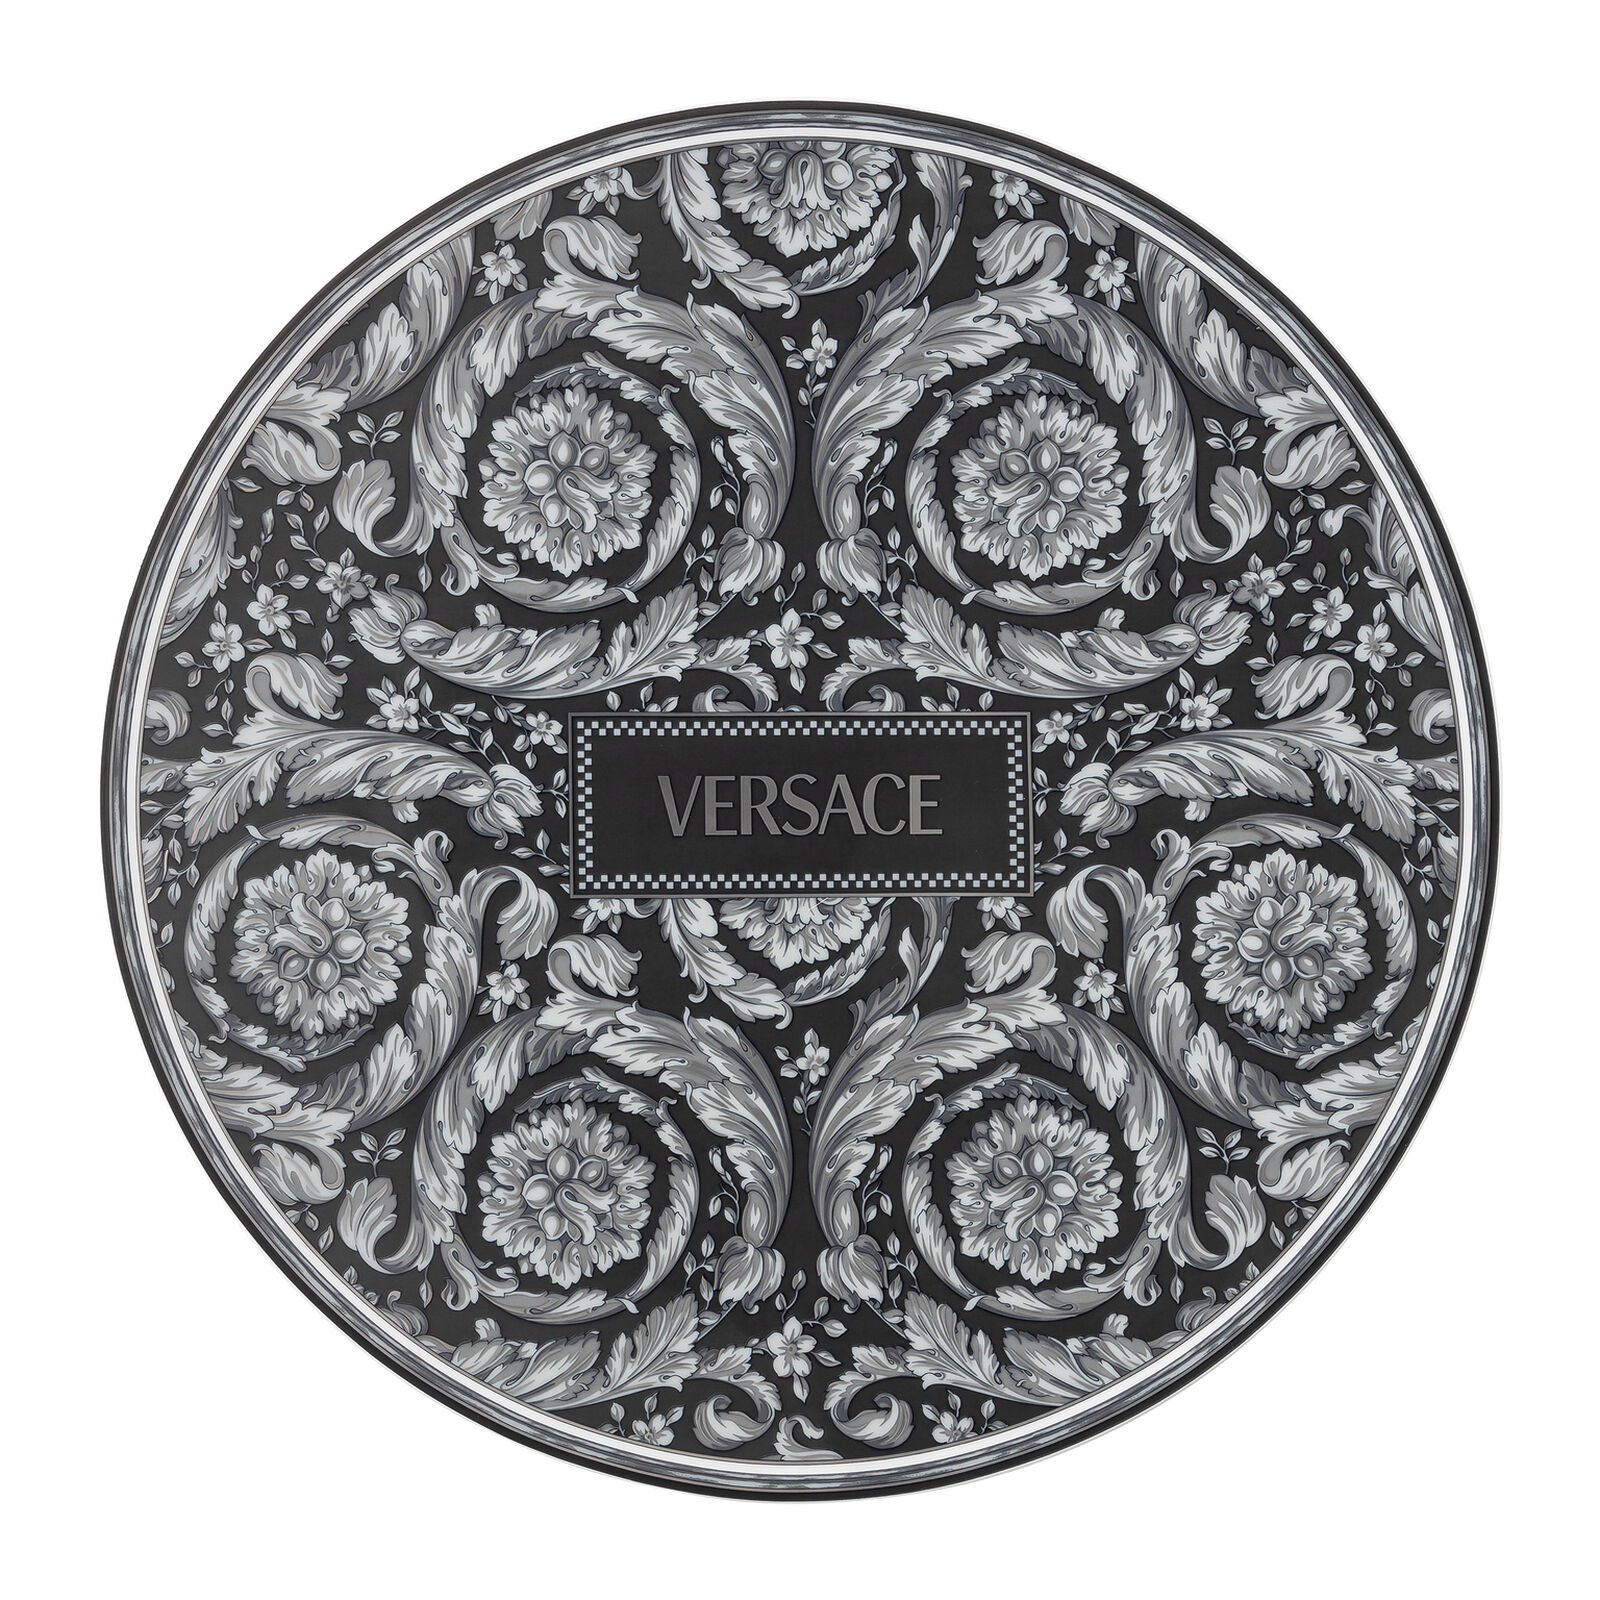 Versace Rosenthal Barocco Barocco Haze service plate